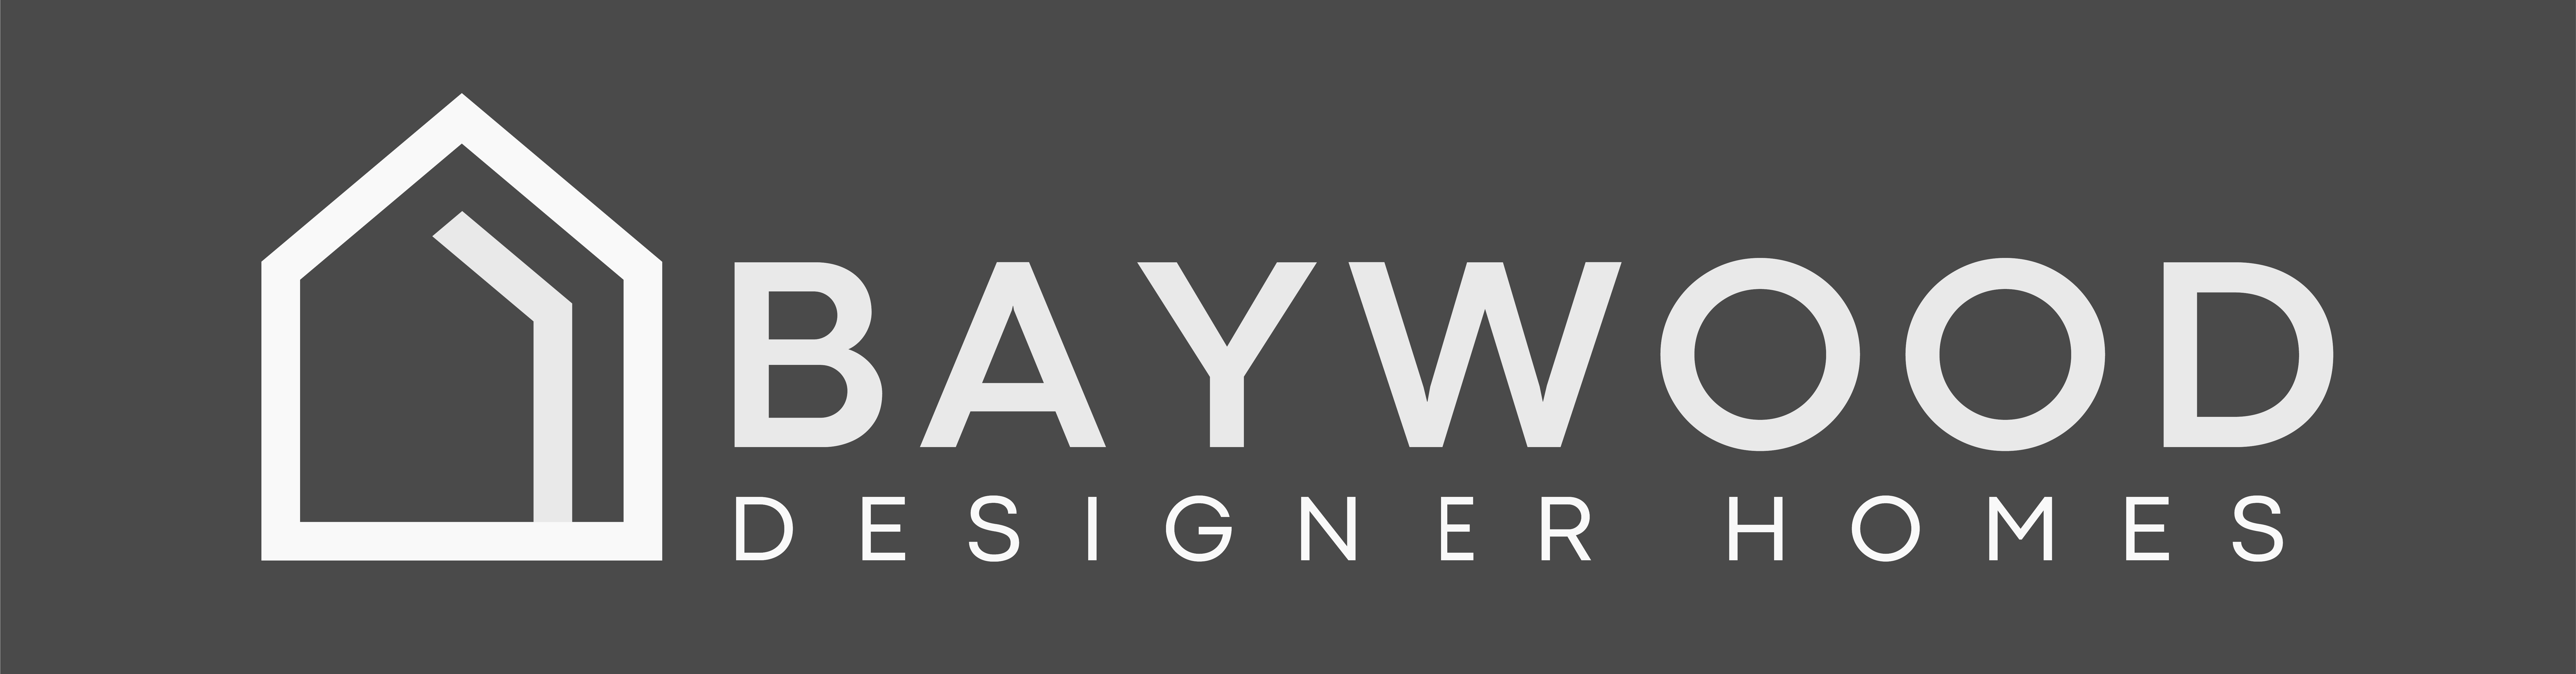 Baywood Designer Homes